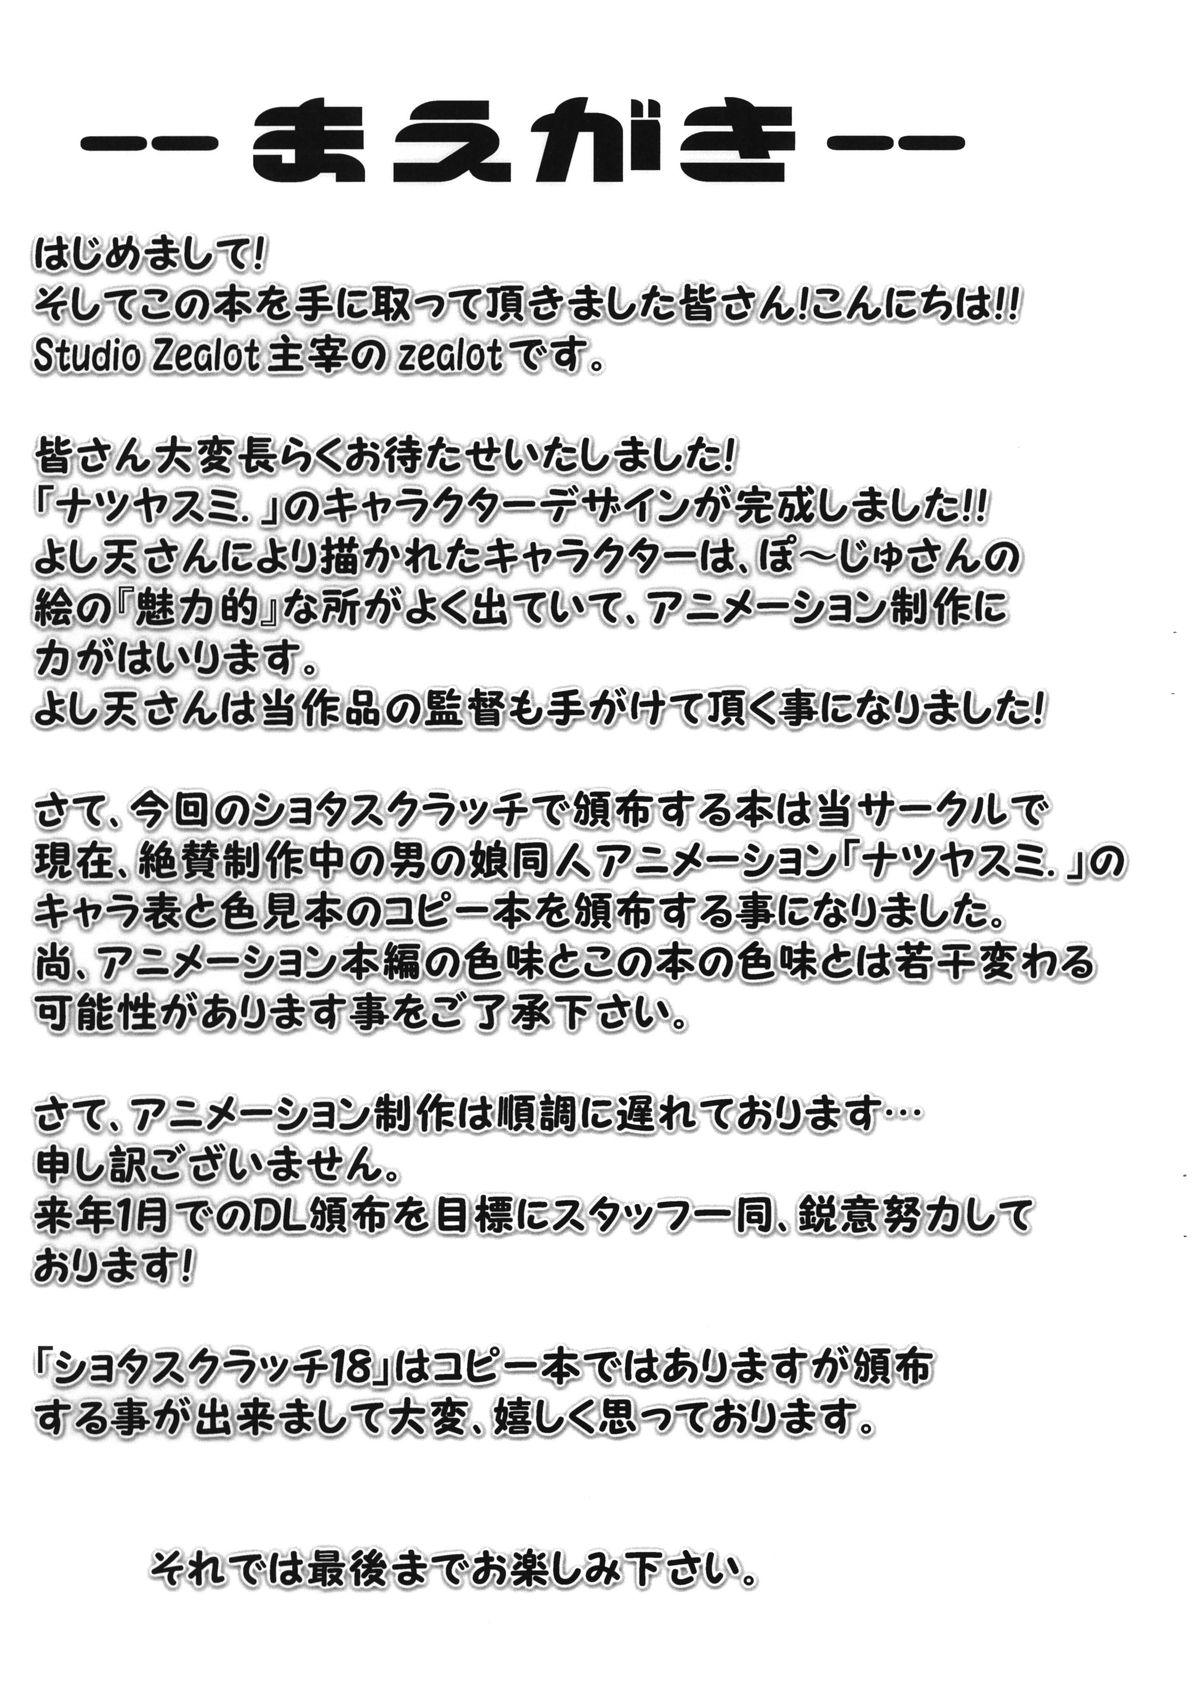 Natsuyasumi Period Chara De Shuu 5 May. 2012 Ver. 3